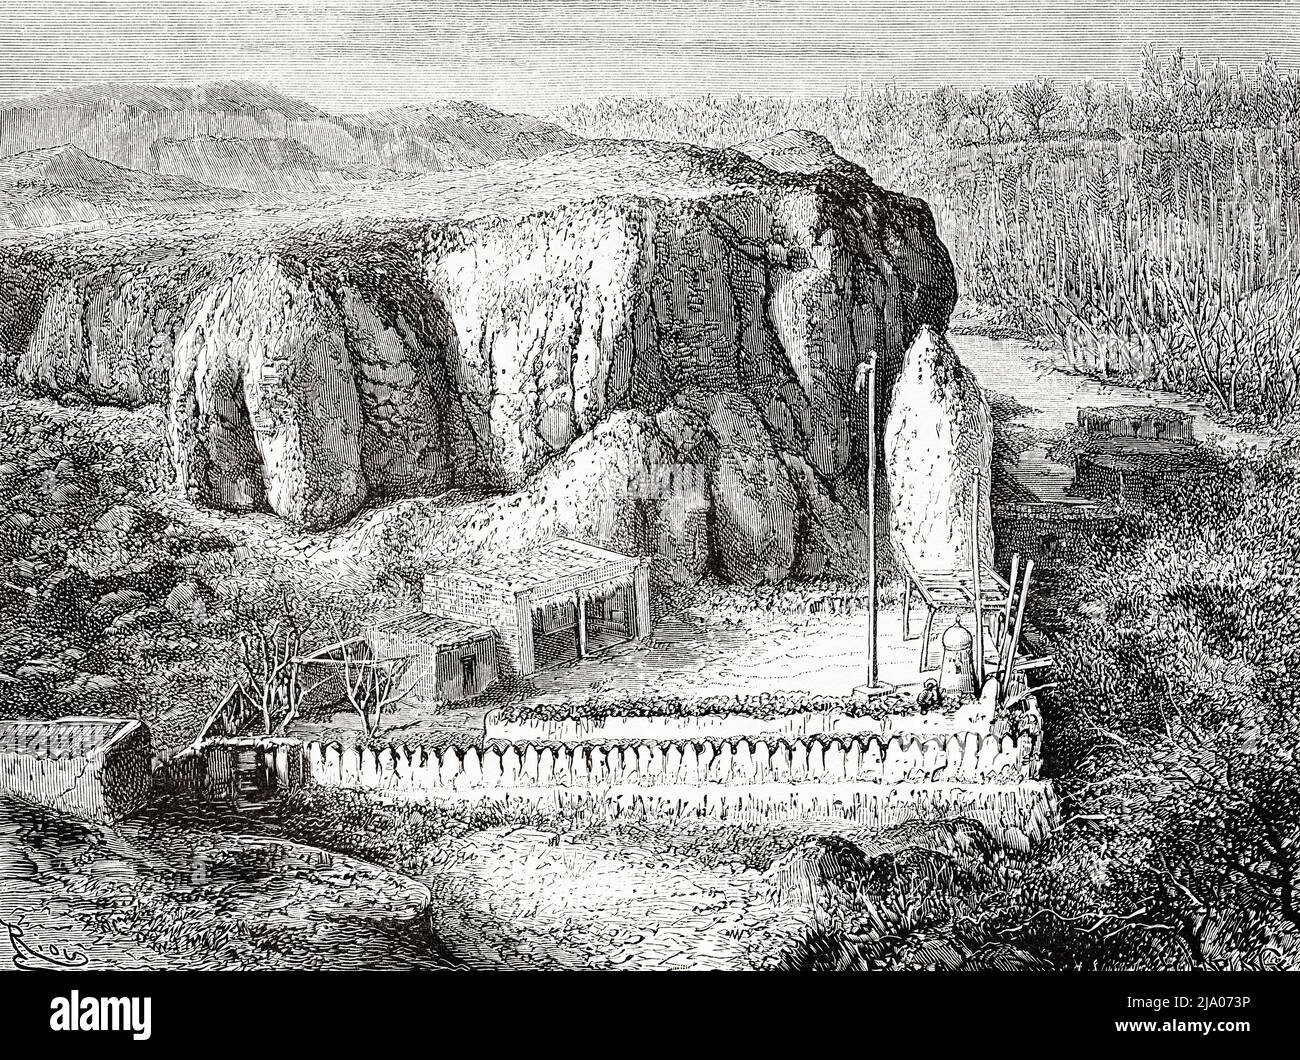 The Tomb of Saint Daniar-Palvan, Near Samarkand. Uzbekistan, Central Asia. From Orenburg to Samarkand 1876-1878 by Madame Marie Ujfalvy-Bourdon, Le Tour du Monde 1879 Stock Photo